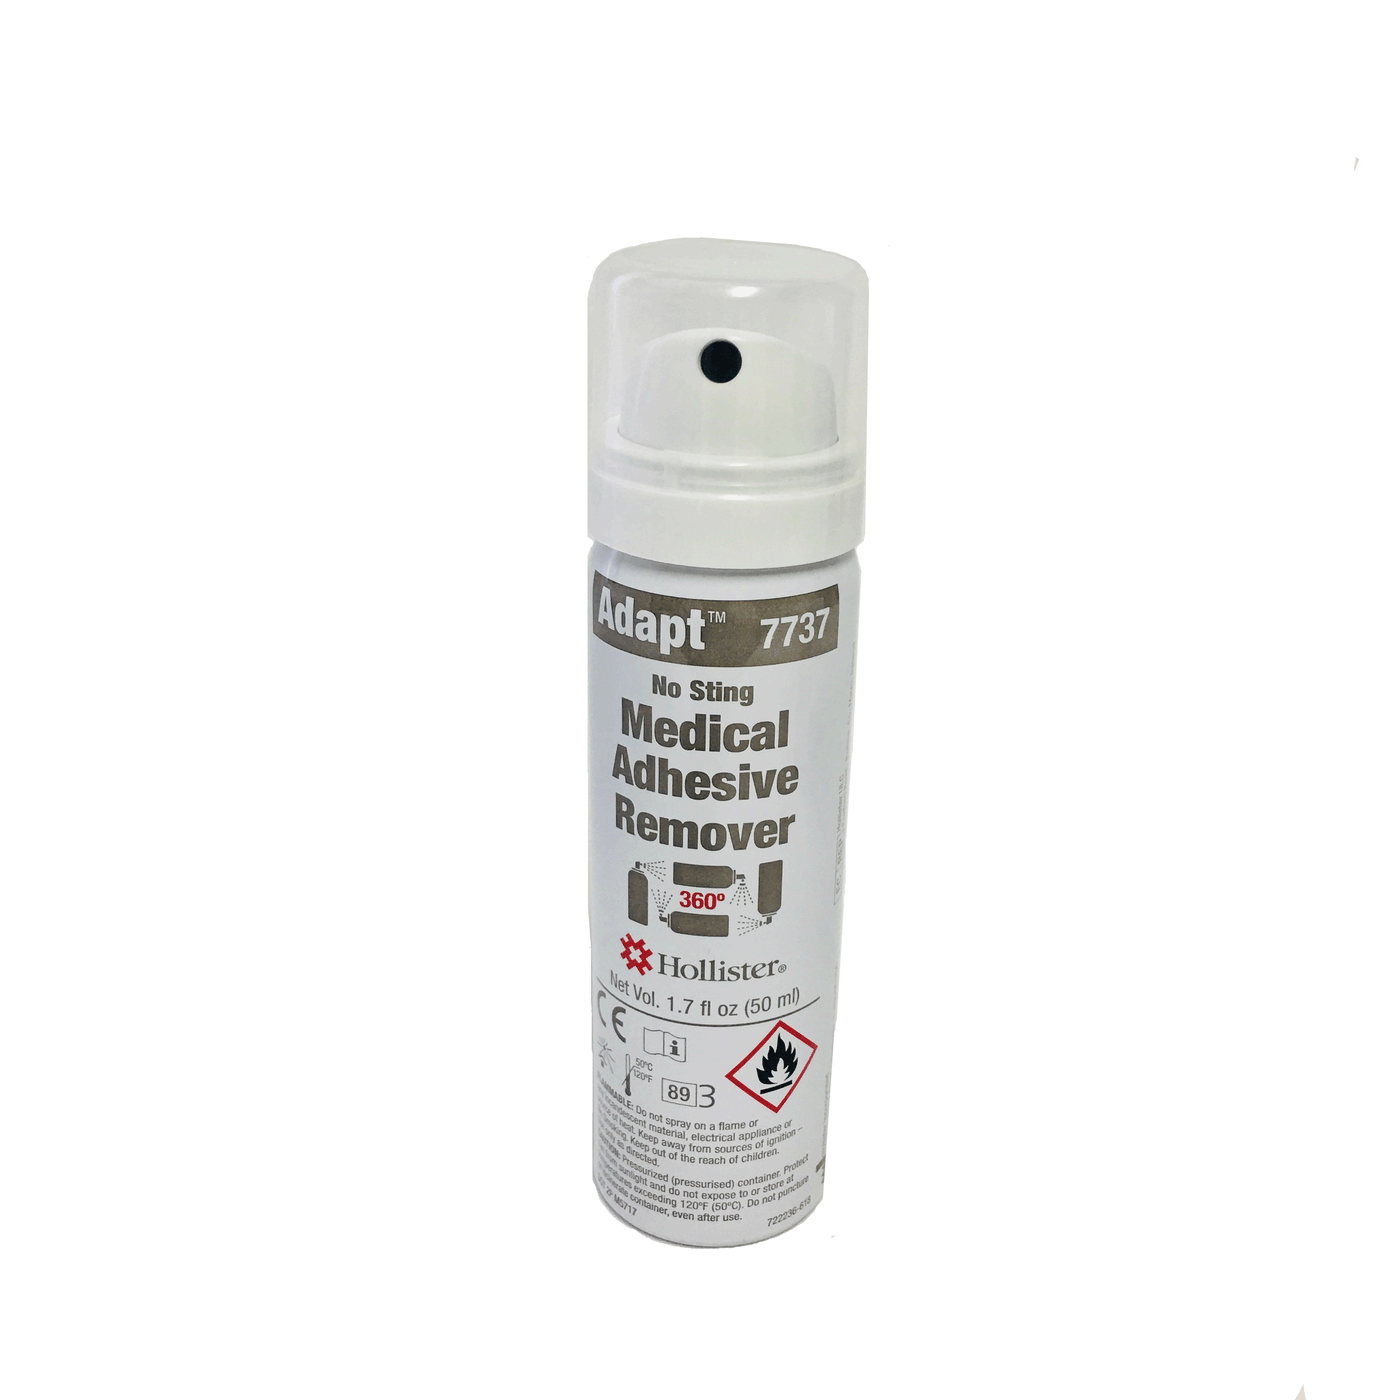 medical adhesive remover spray